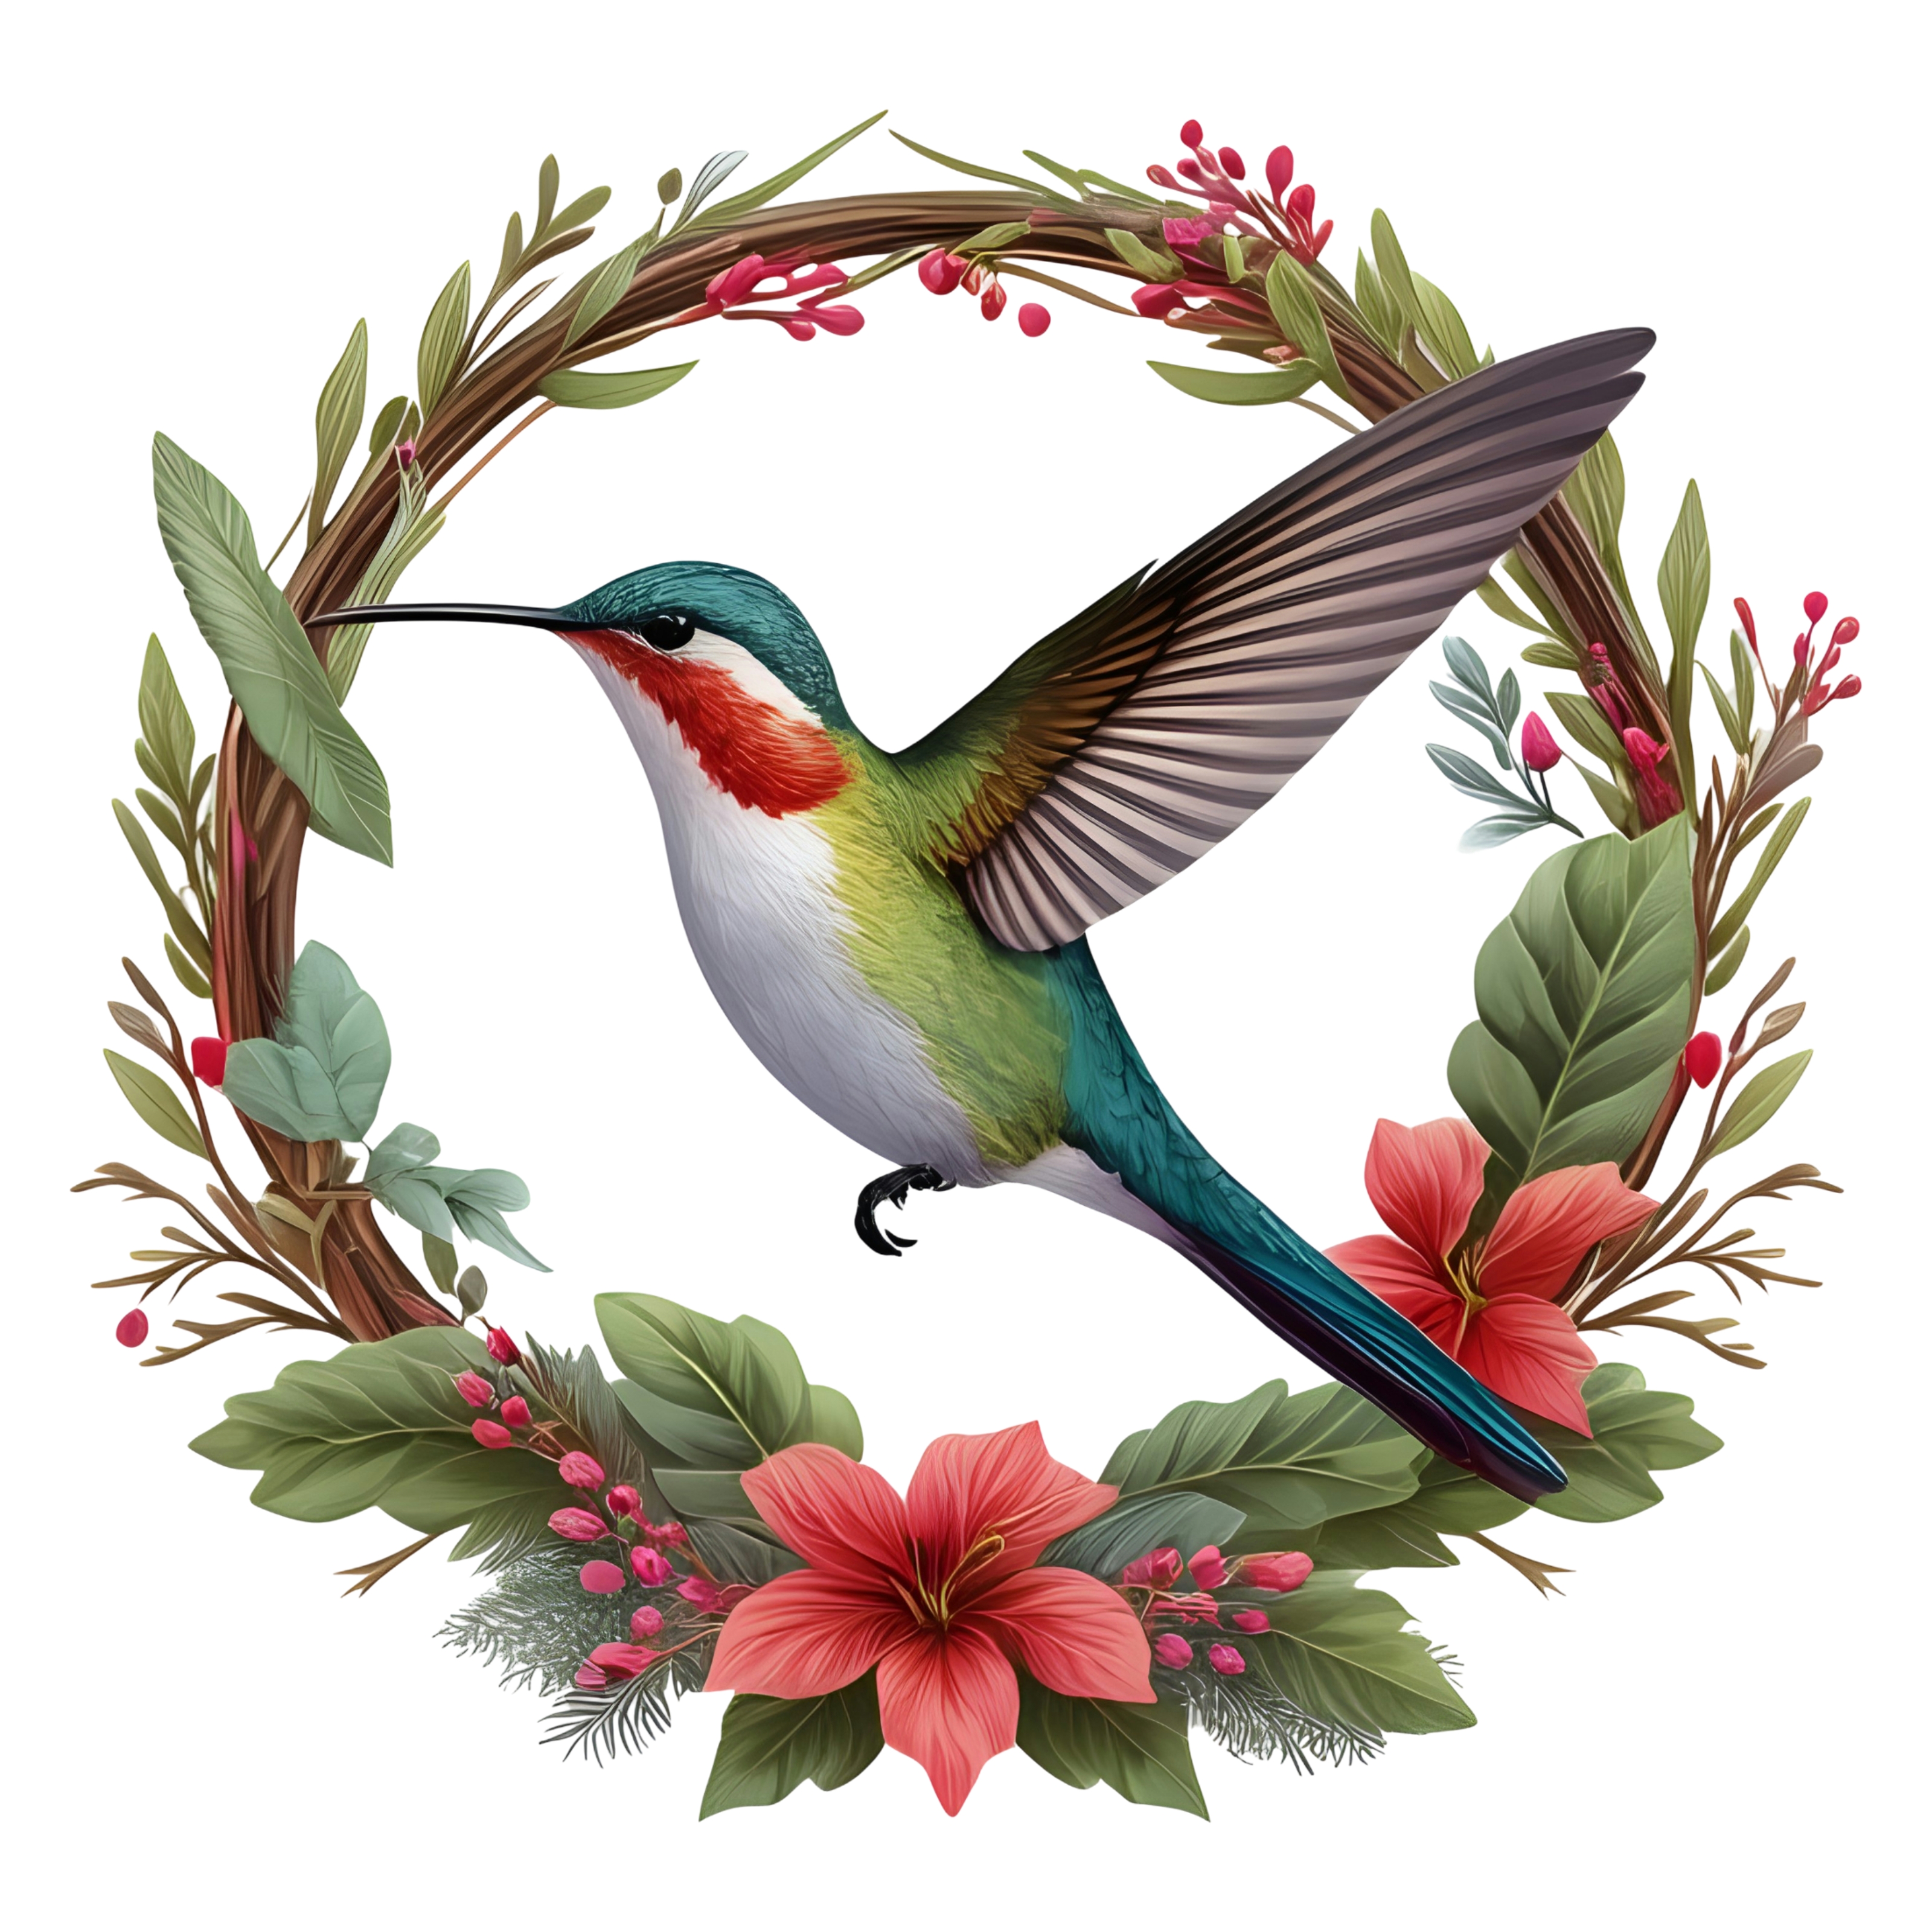 Hummingbird and flowers wreath illustration design